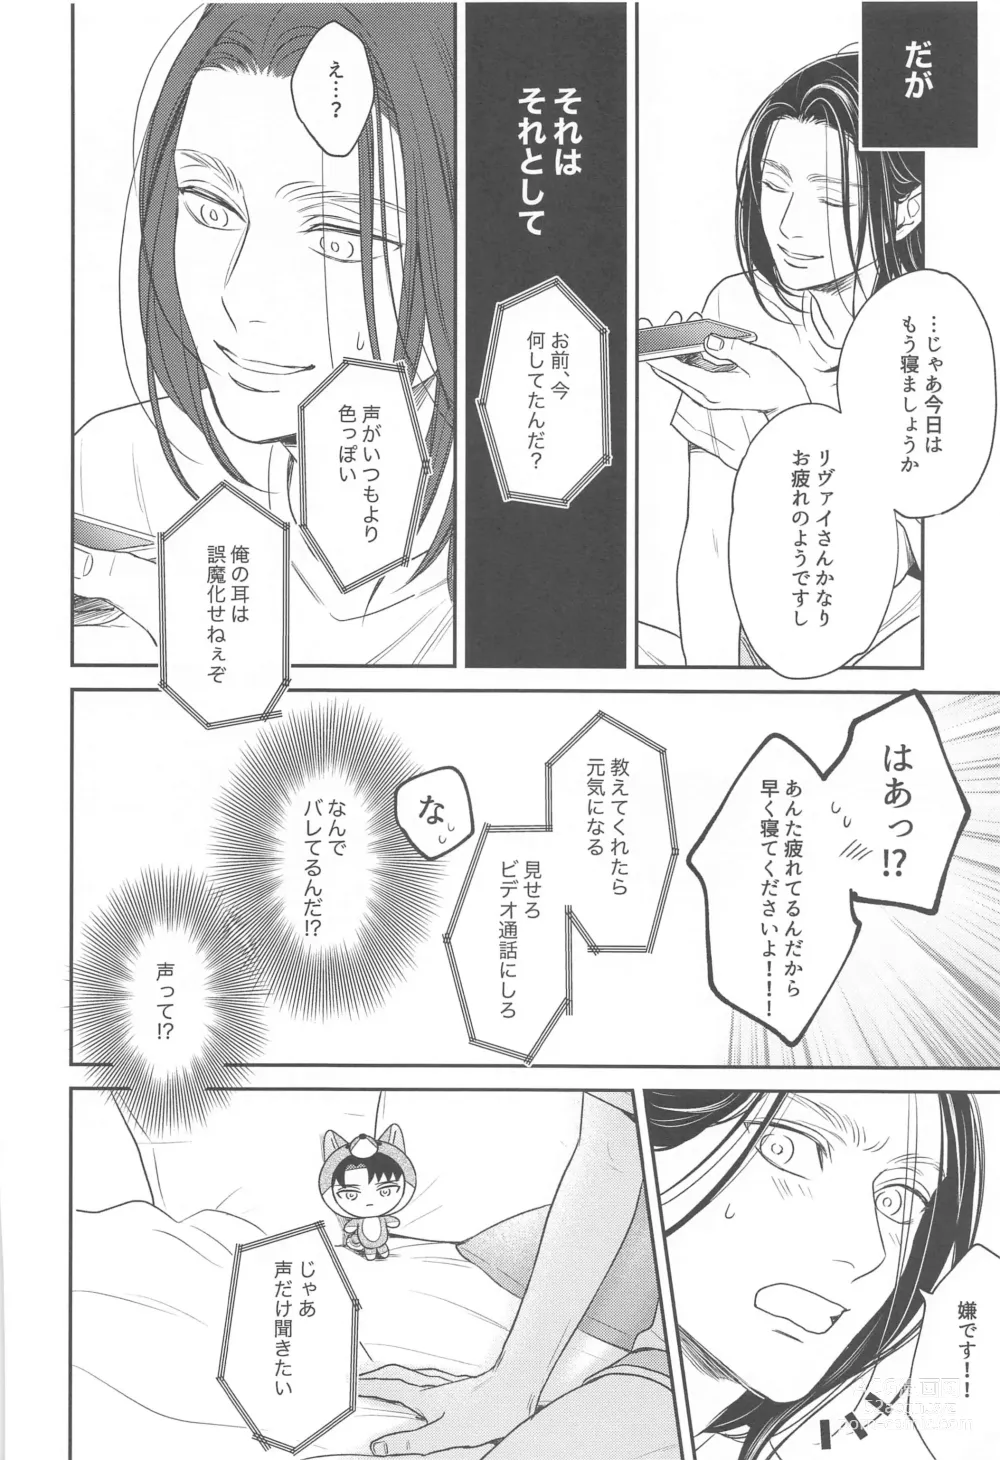 Page 15 of doujinshi NUI MANI